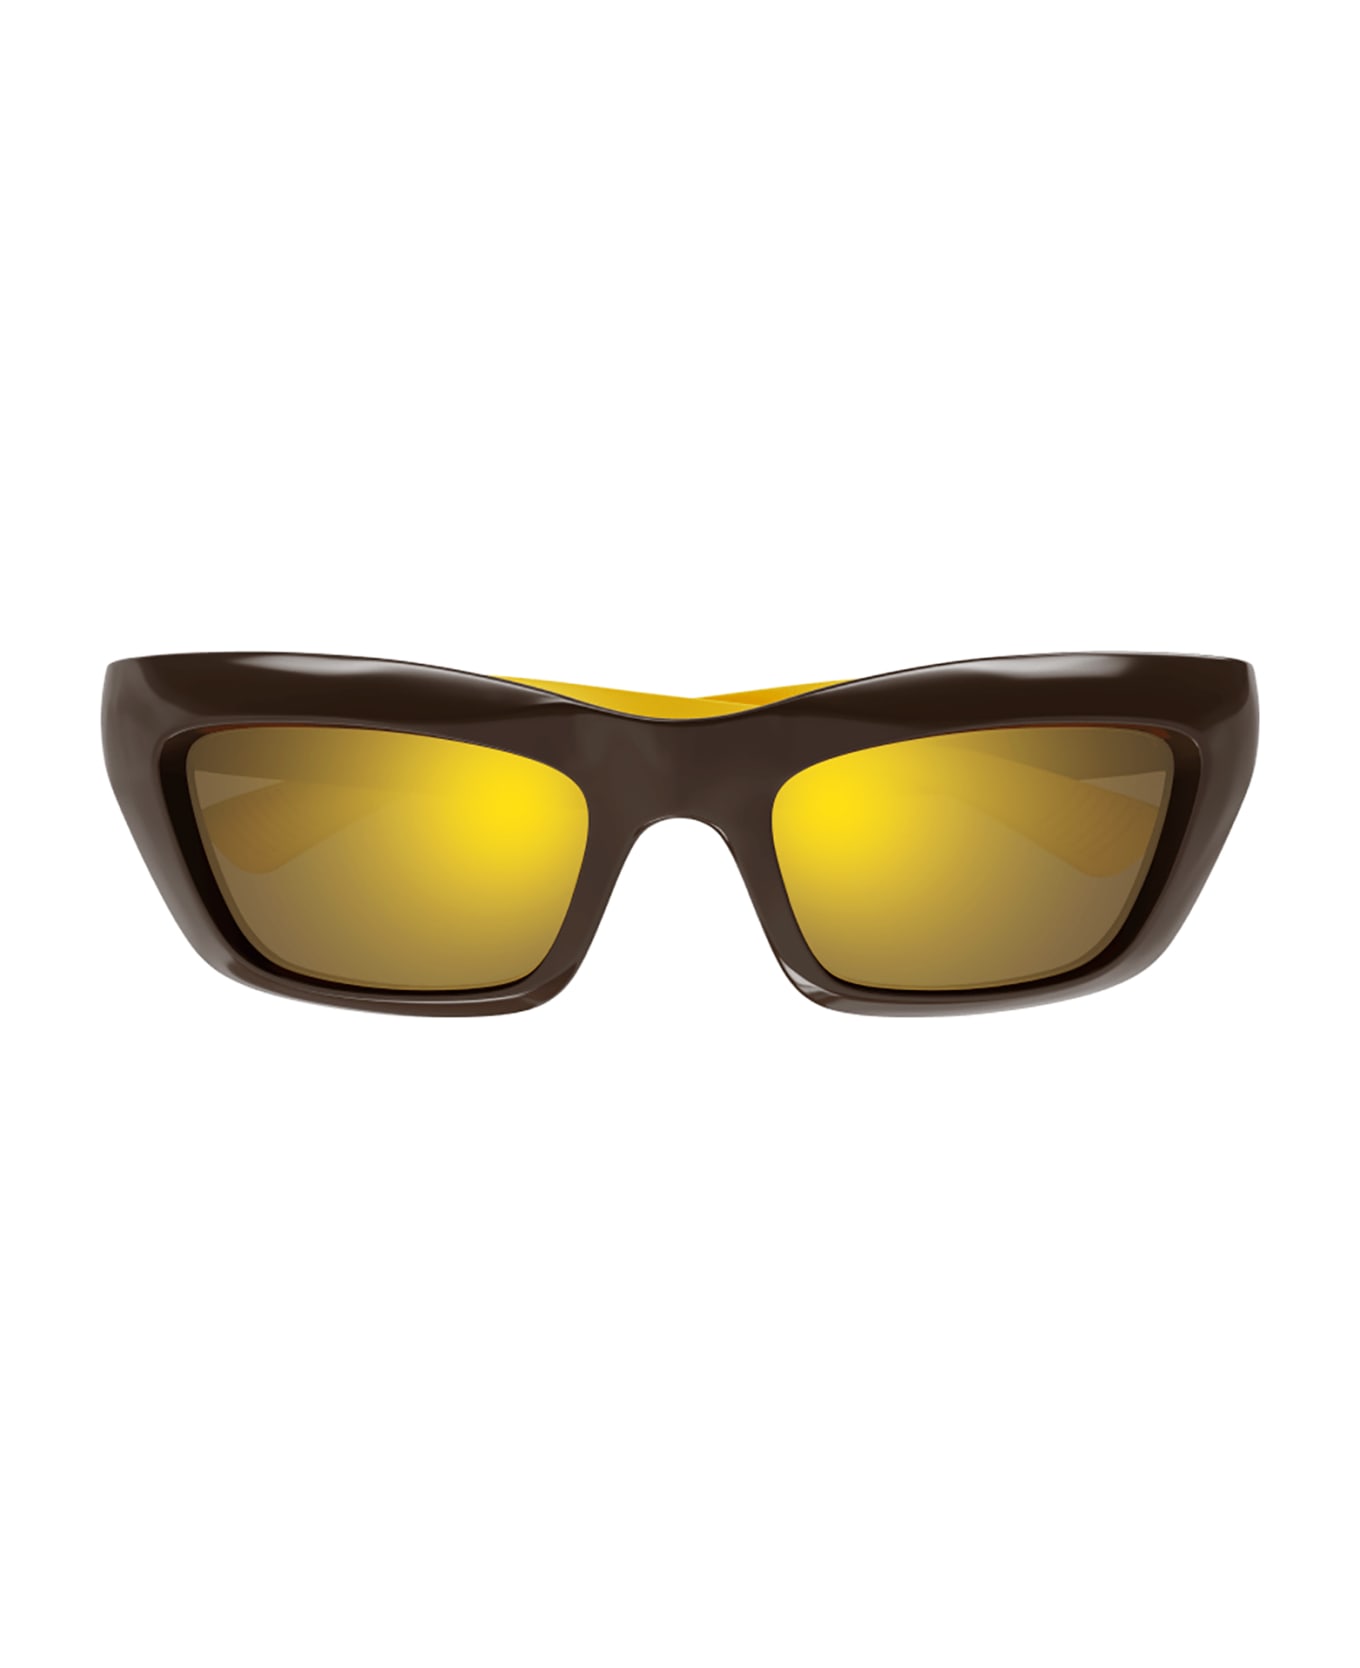 Bottega Veneta Eyewear 1e4c4id0a - Sunglasses Magician D2 0032 S 807T4